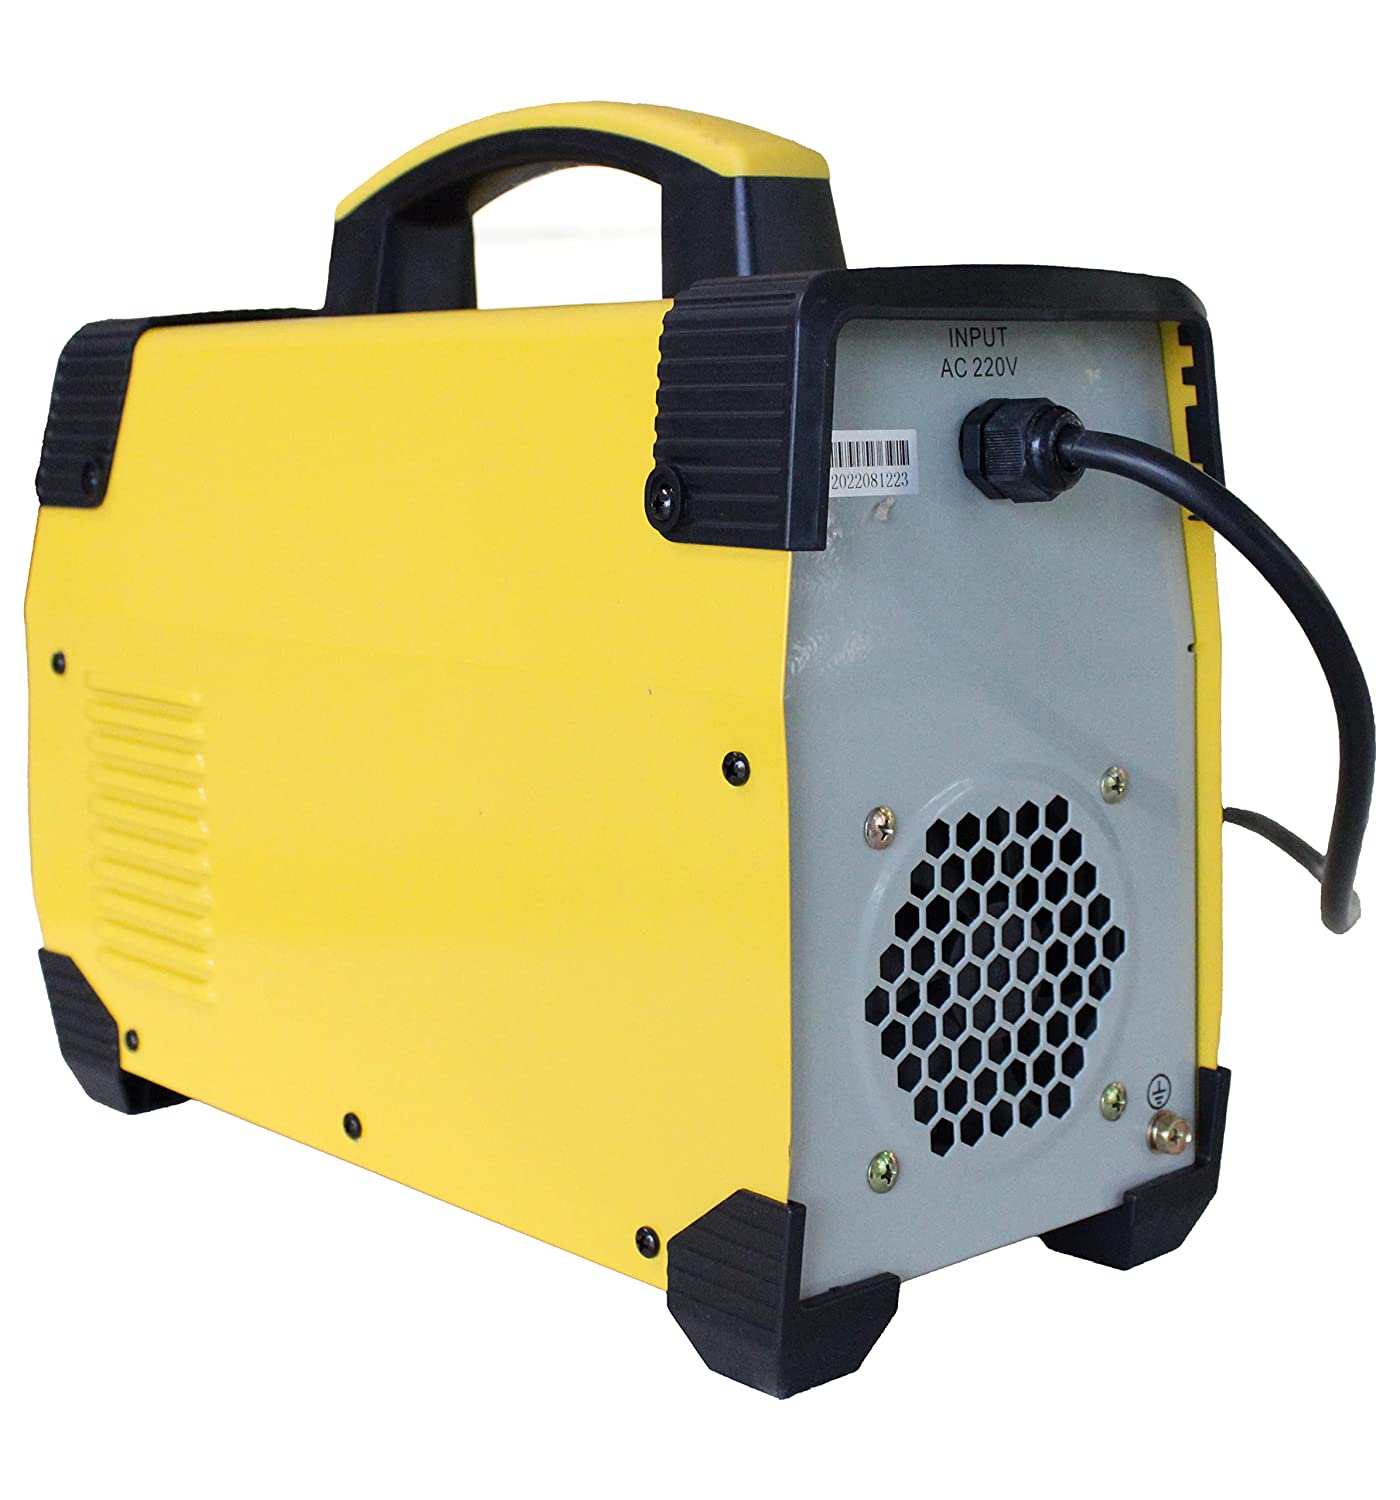 Aegon ARC 250GS - Portable 250A Inverter Arc Welding Machine/Welder (Yellow)